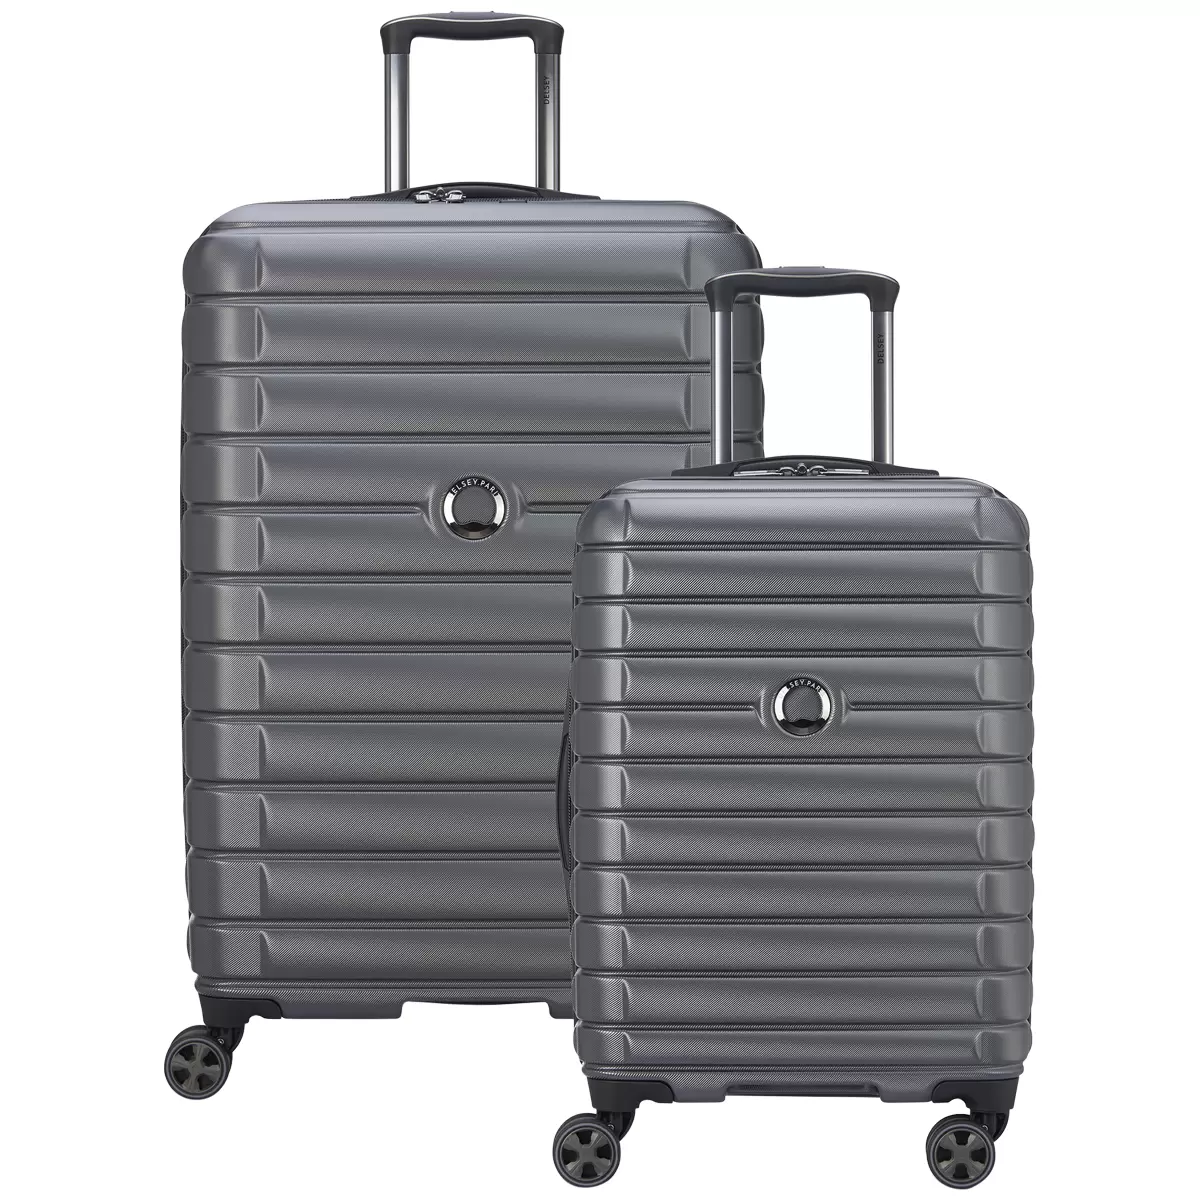 Delsey Hardside 2 Piece Luggage Set